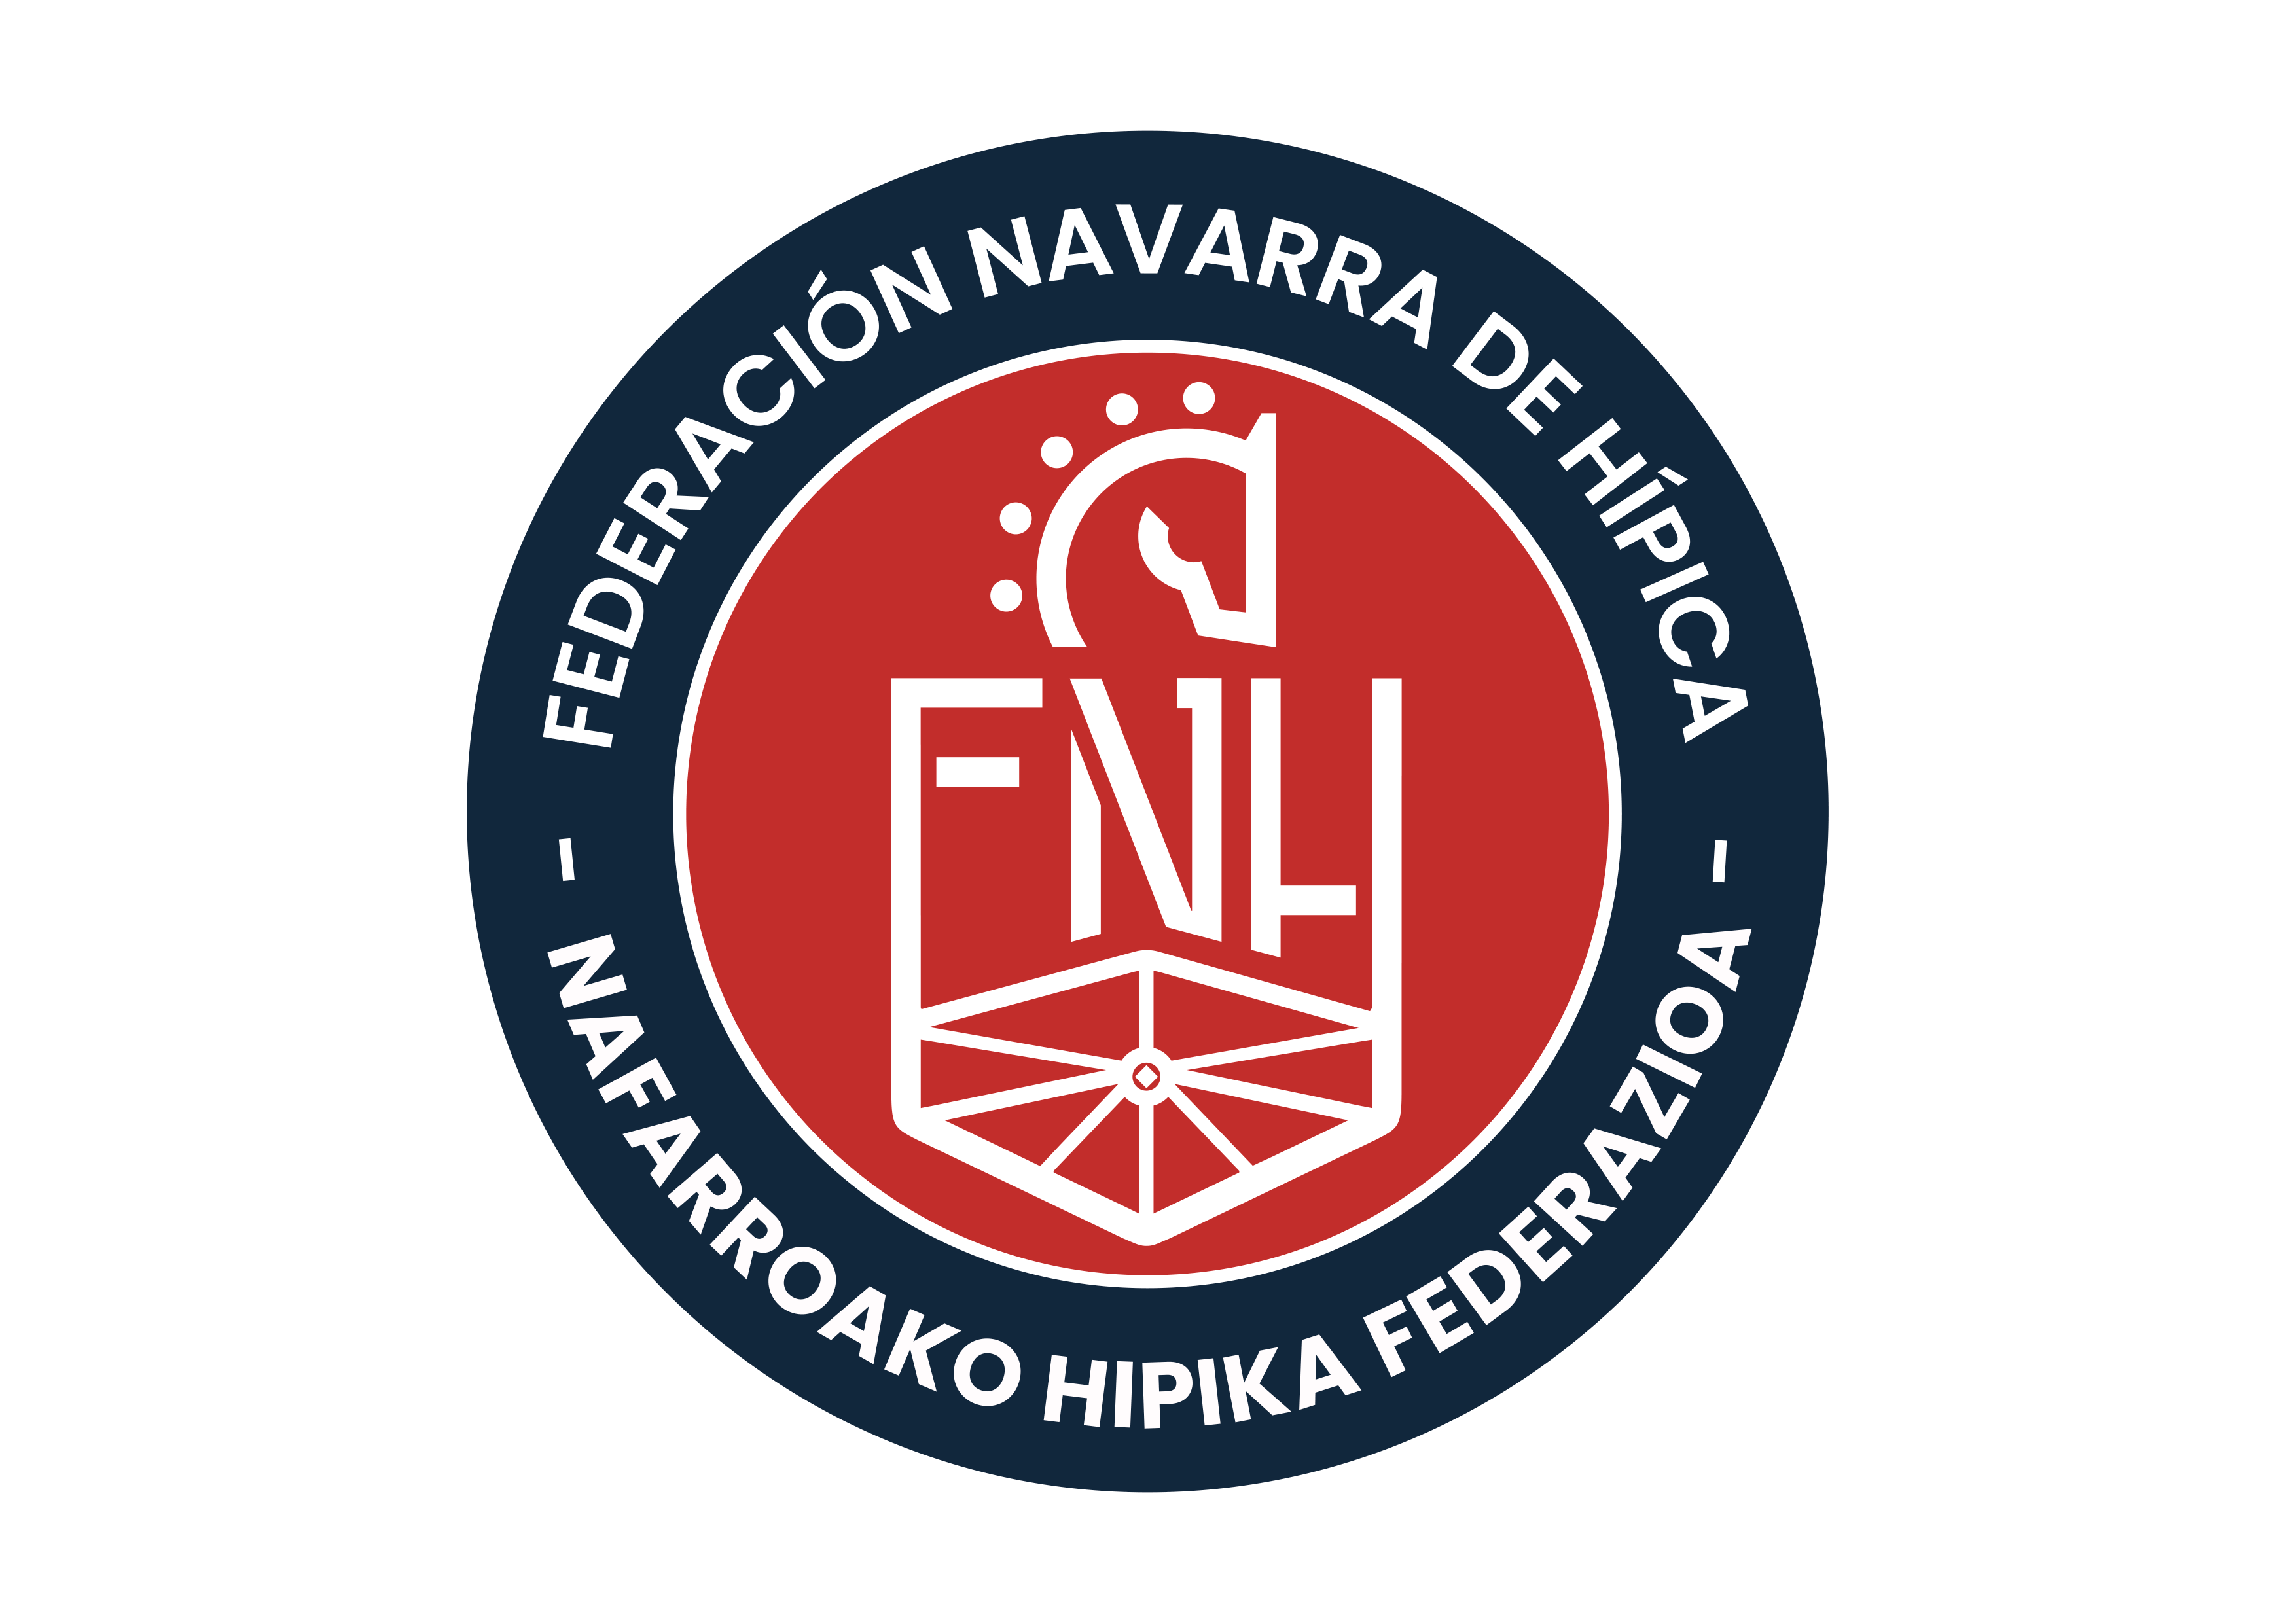 Federación Navarra de Hípica